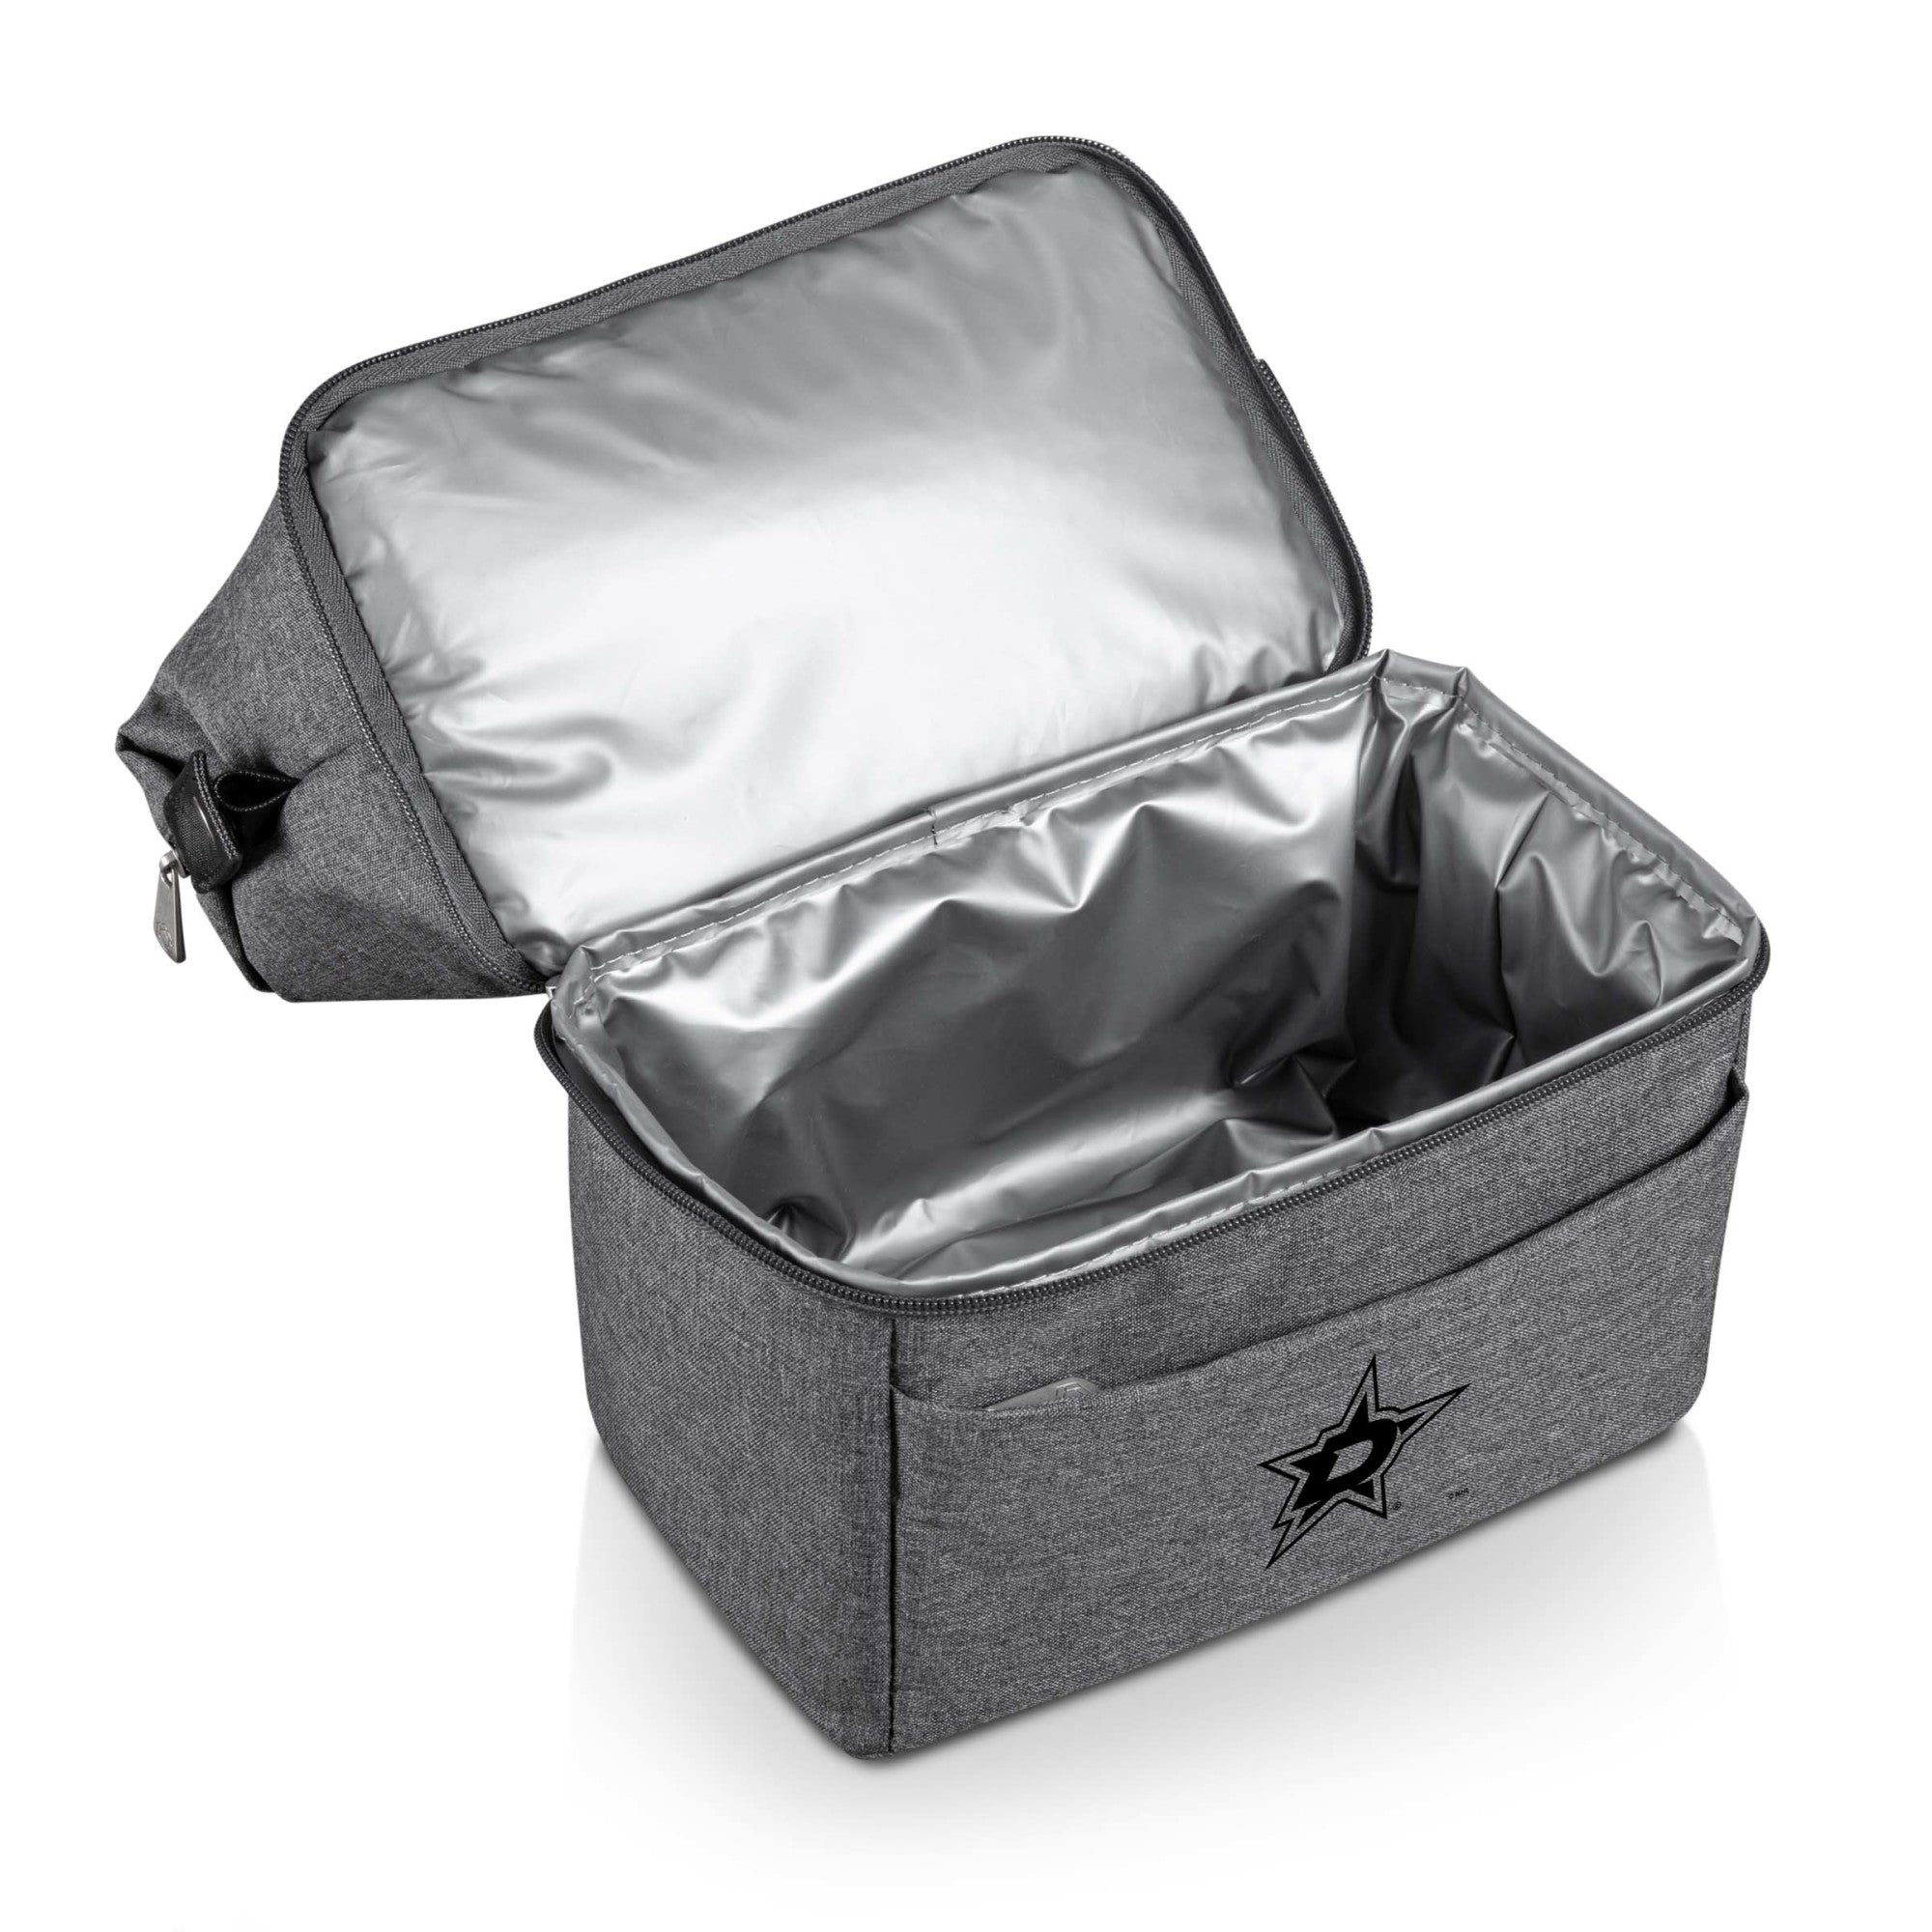 Dallas Stars - Urban Lunch Bag Cooler